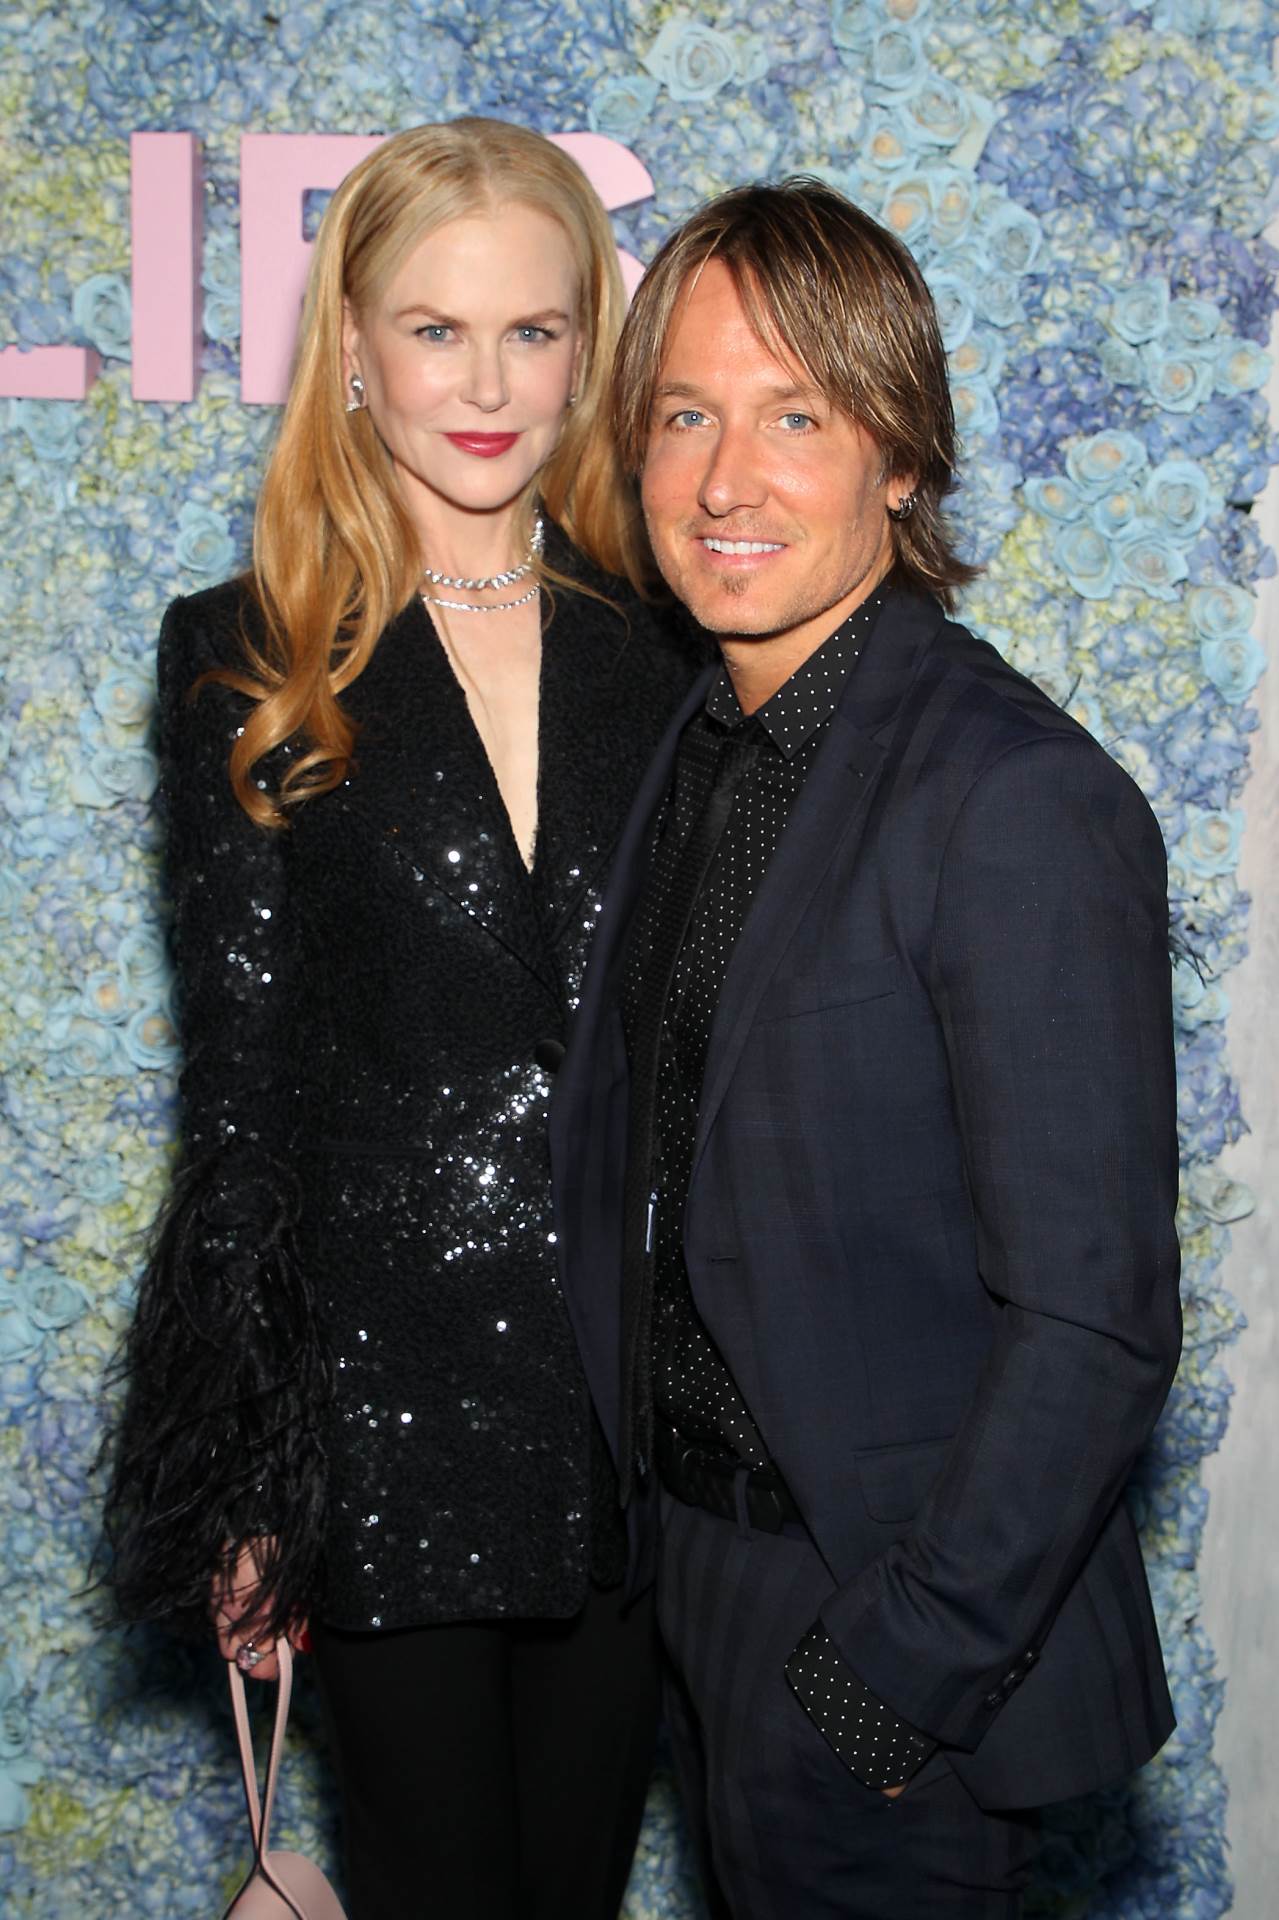 LJUBOMORA Nicole Kidman postala prebliska sa suprugom Michelle Pfeiffer